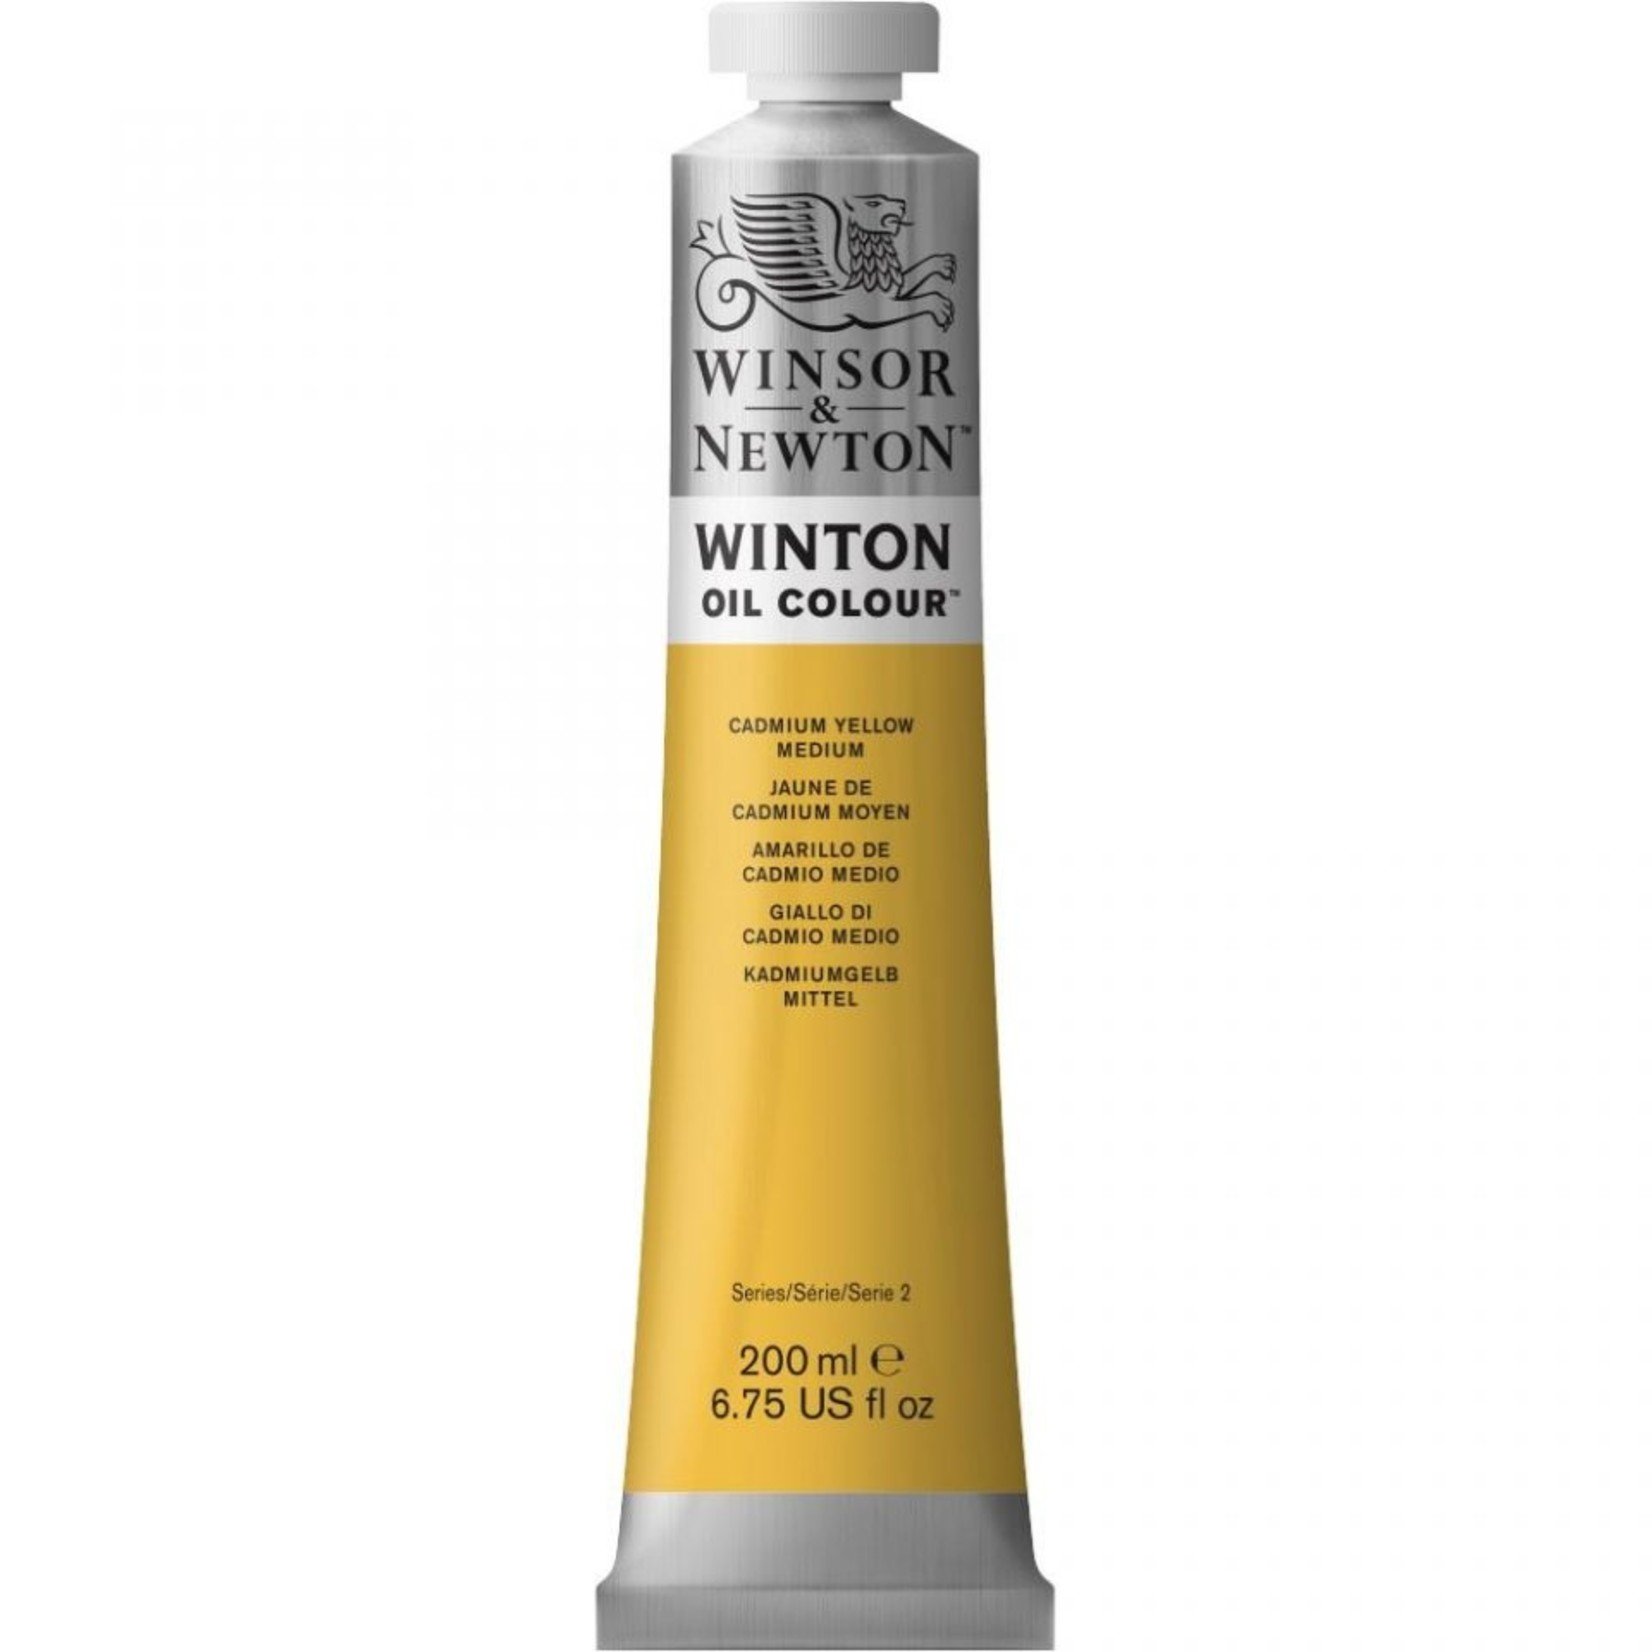 WINSOR & NEWTON WINTON OIL 200ML CADMIUM YELLOW MEDIUM